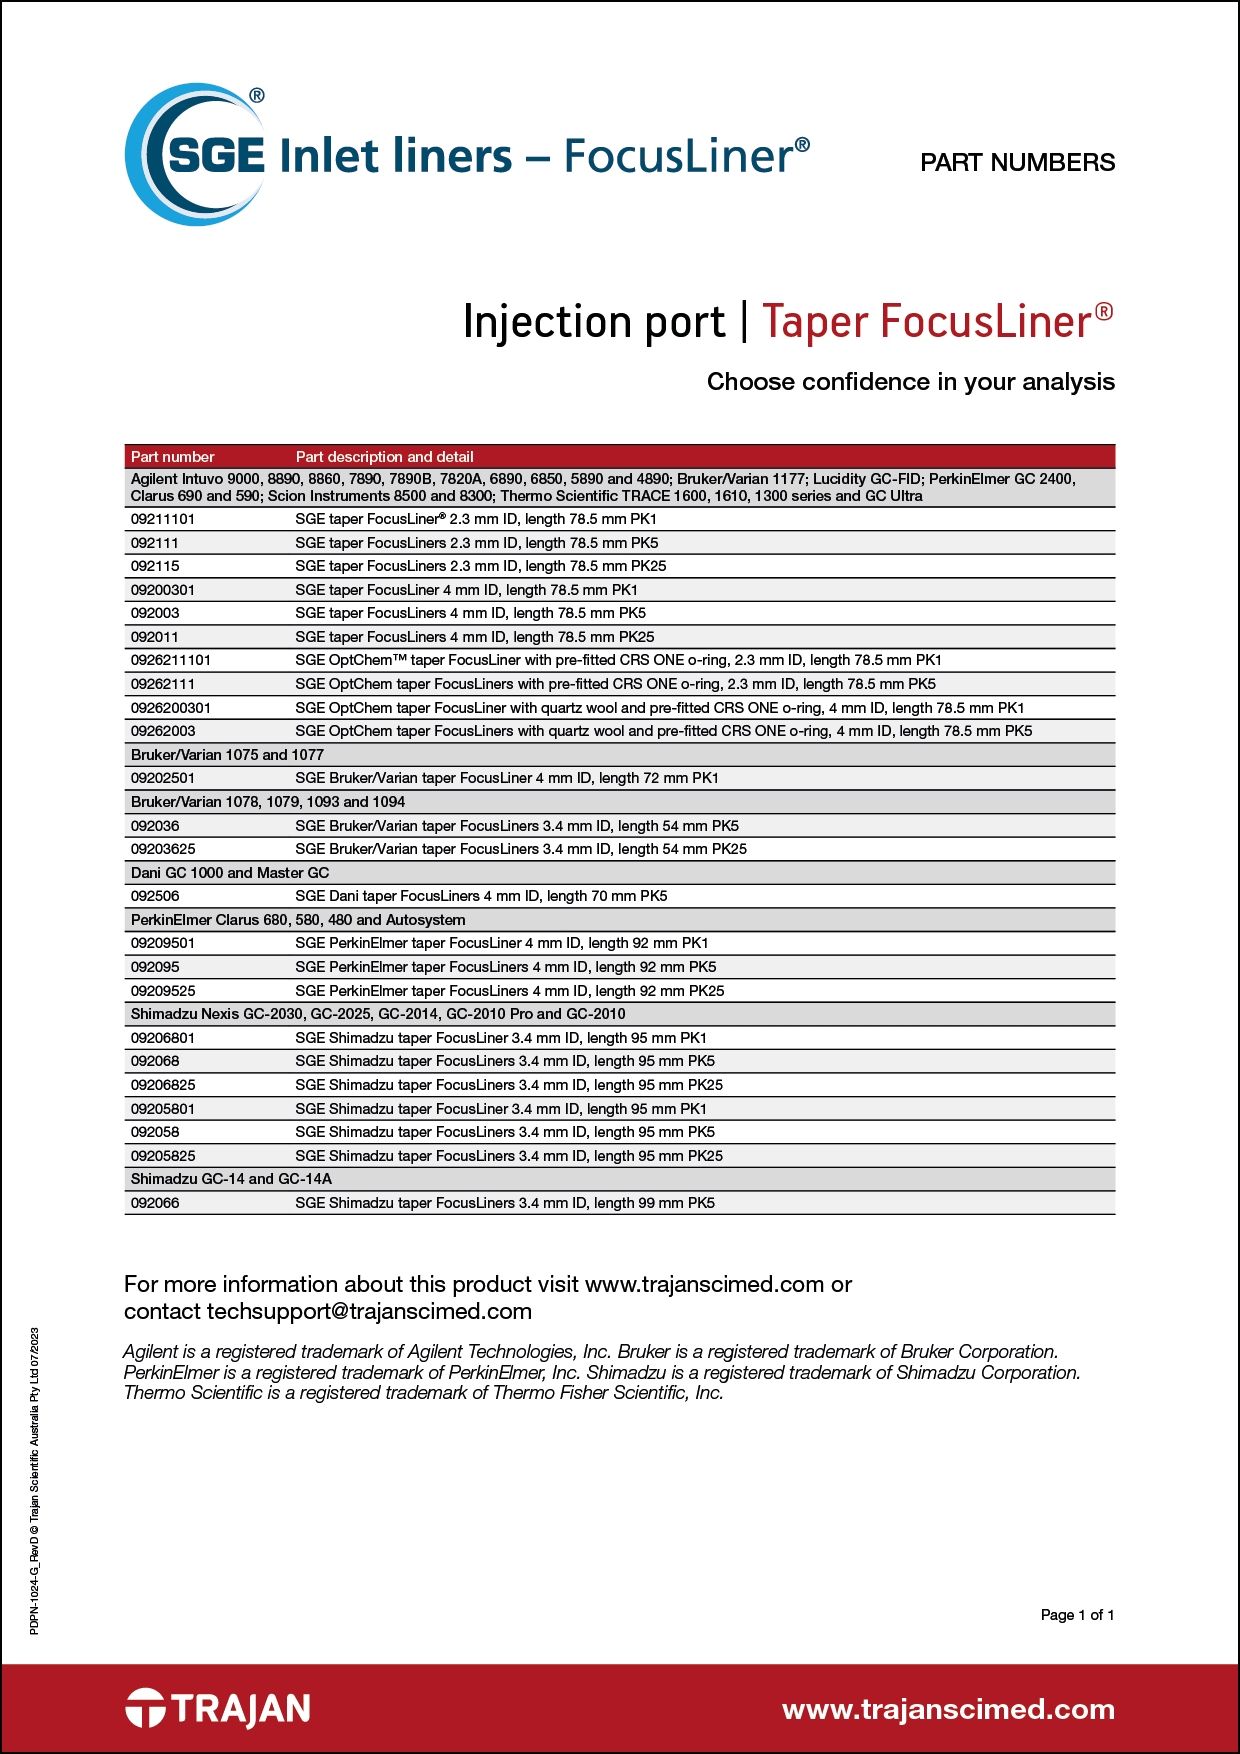 Part Number List - SGE taper FocusLiners